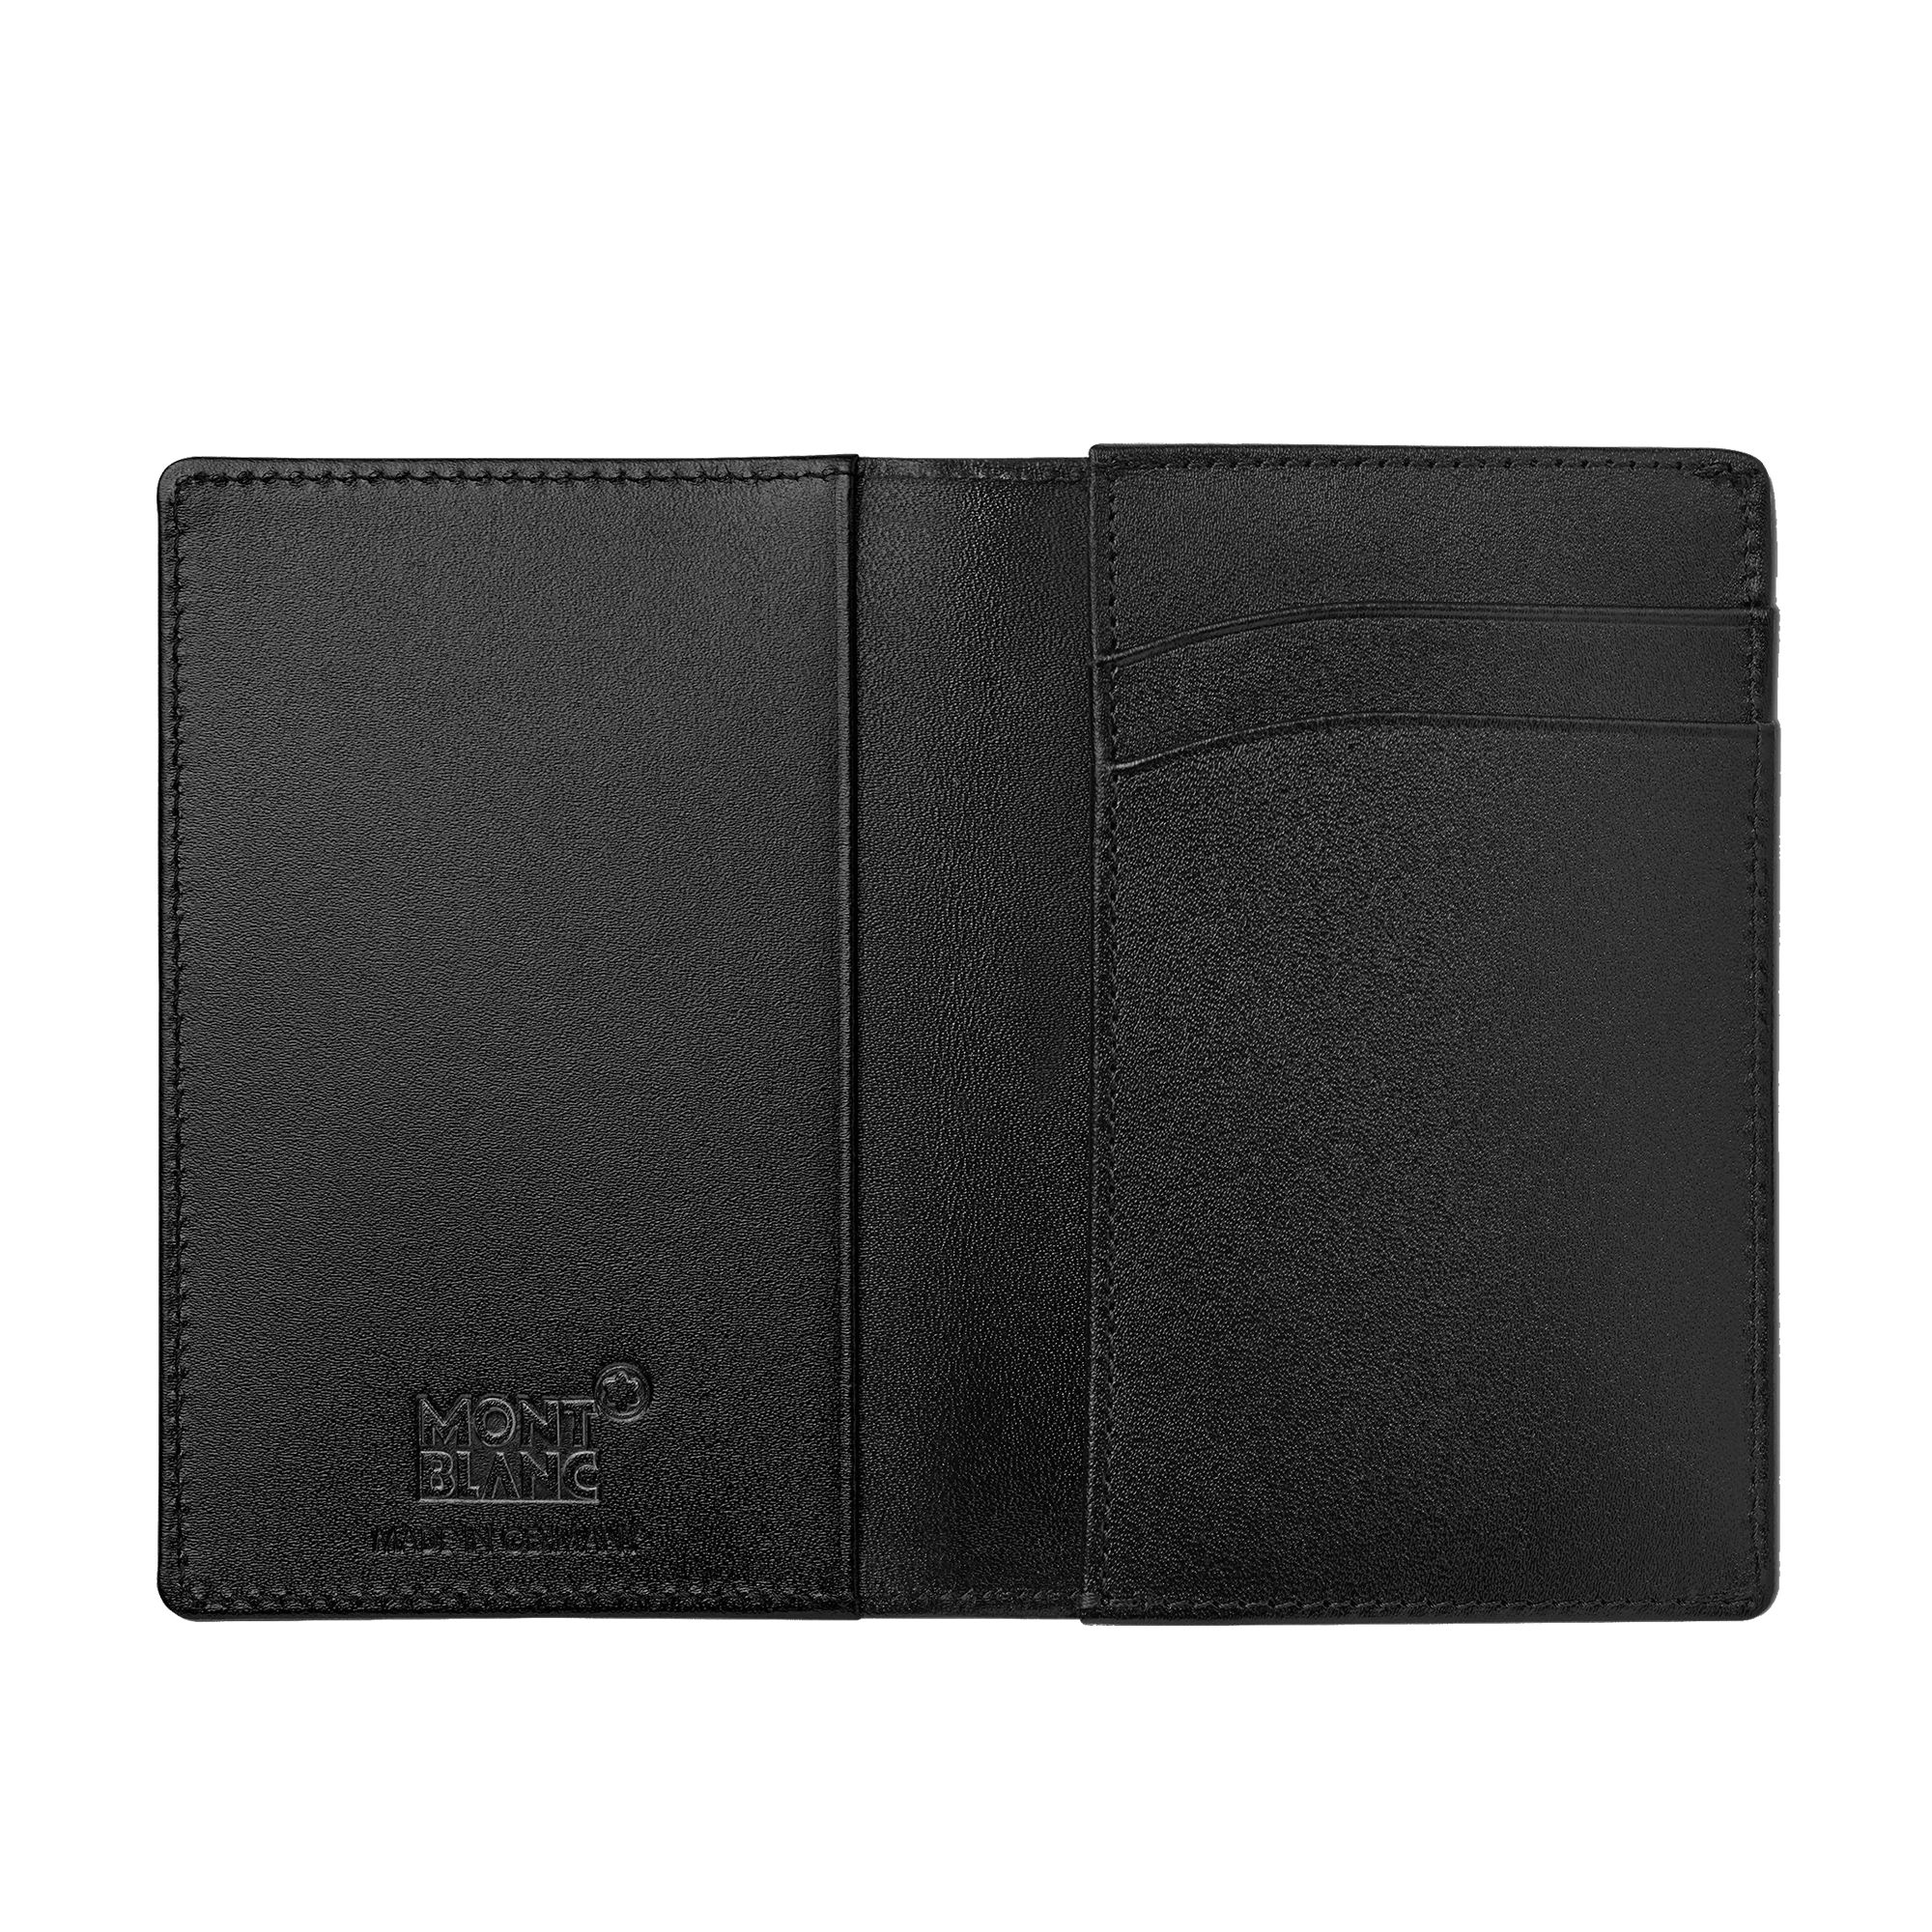 Meisterstuck Business Card Holder in Black Leather